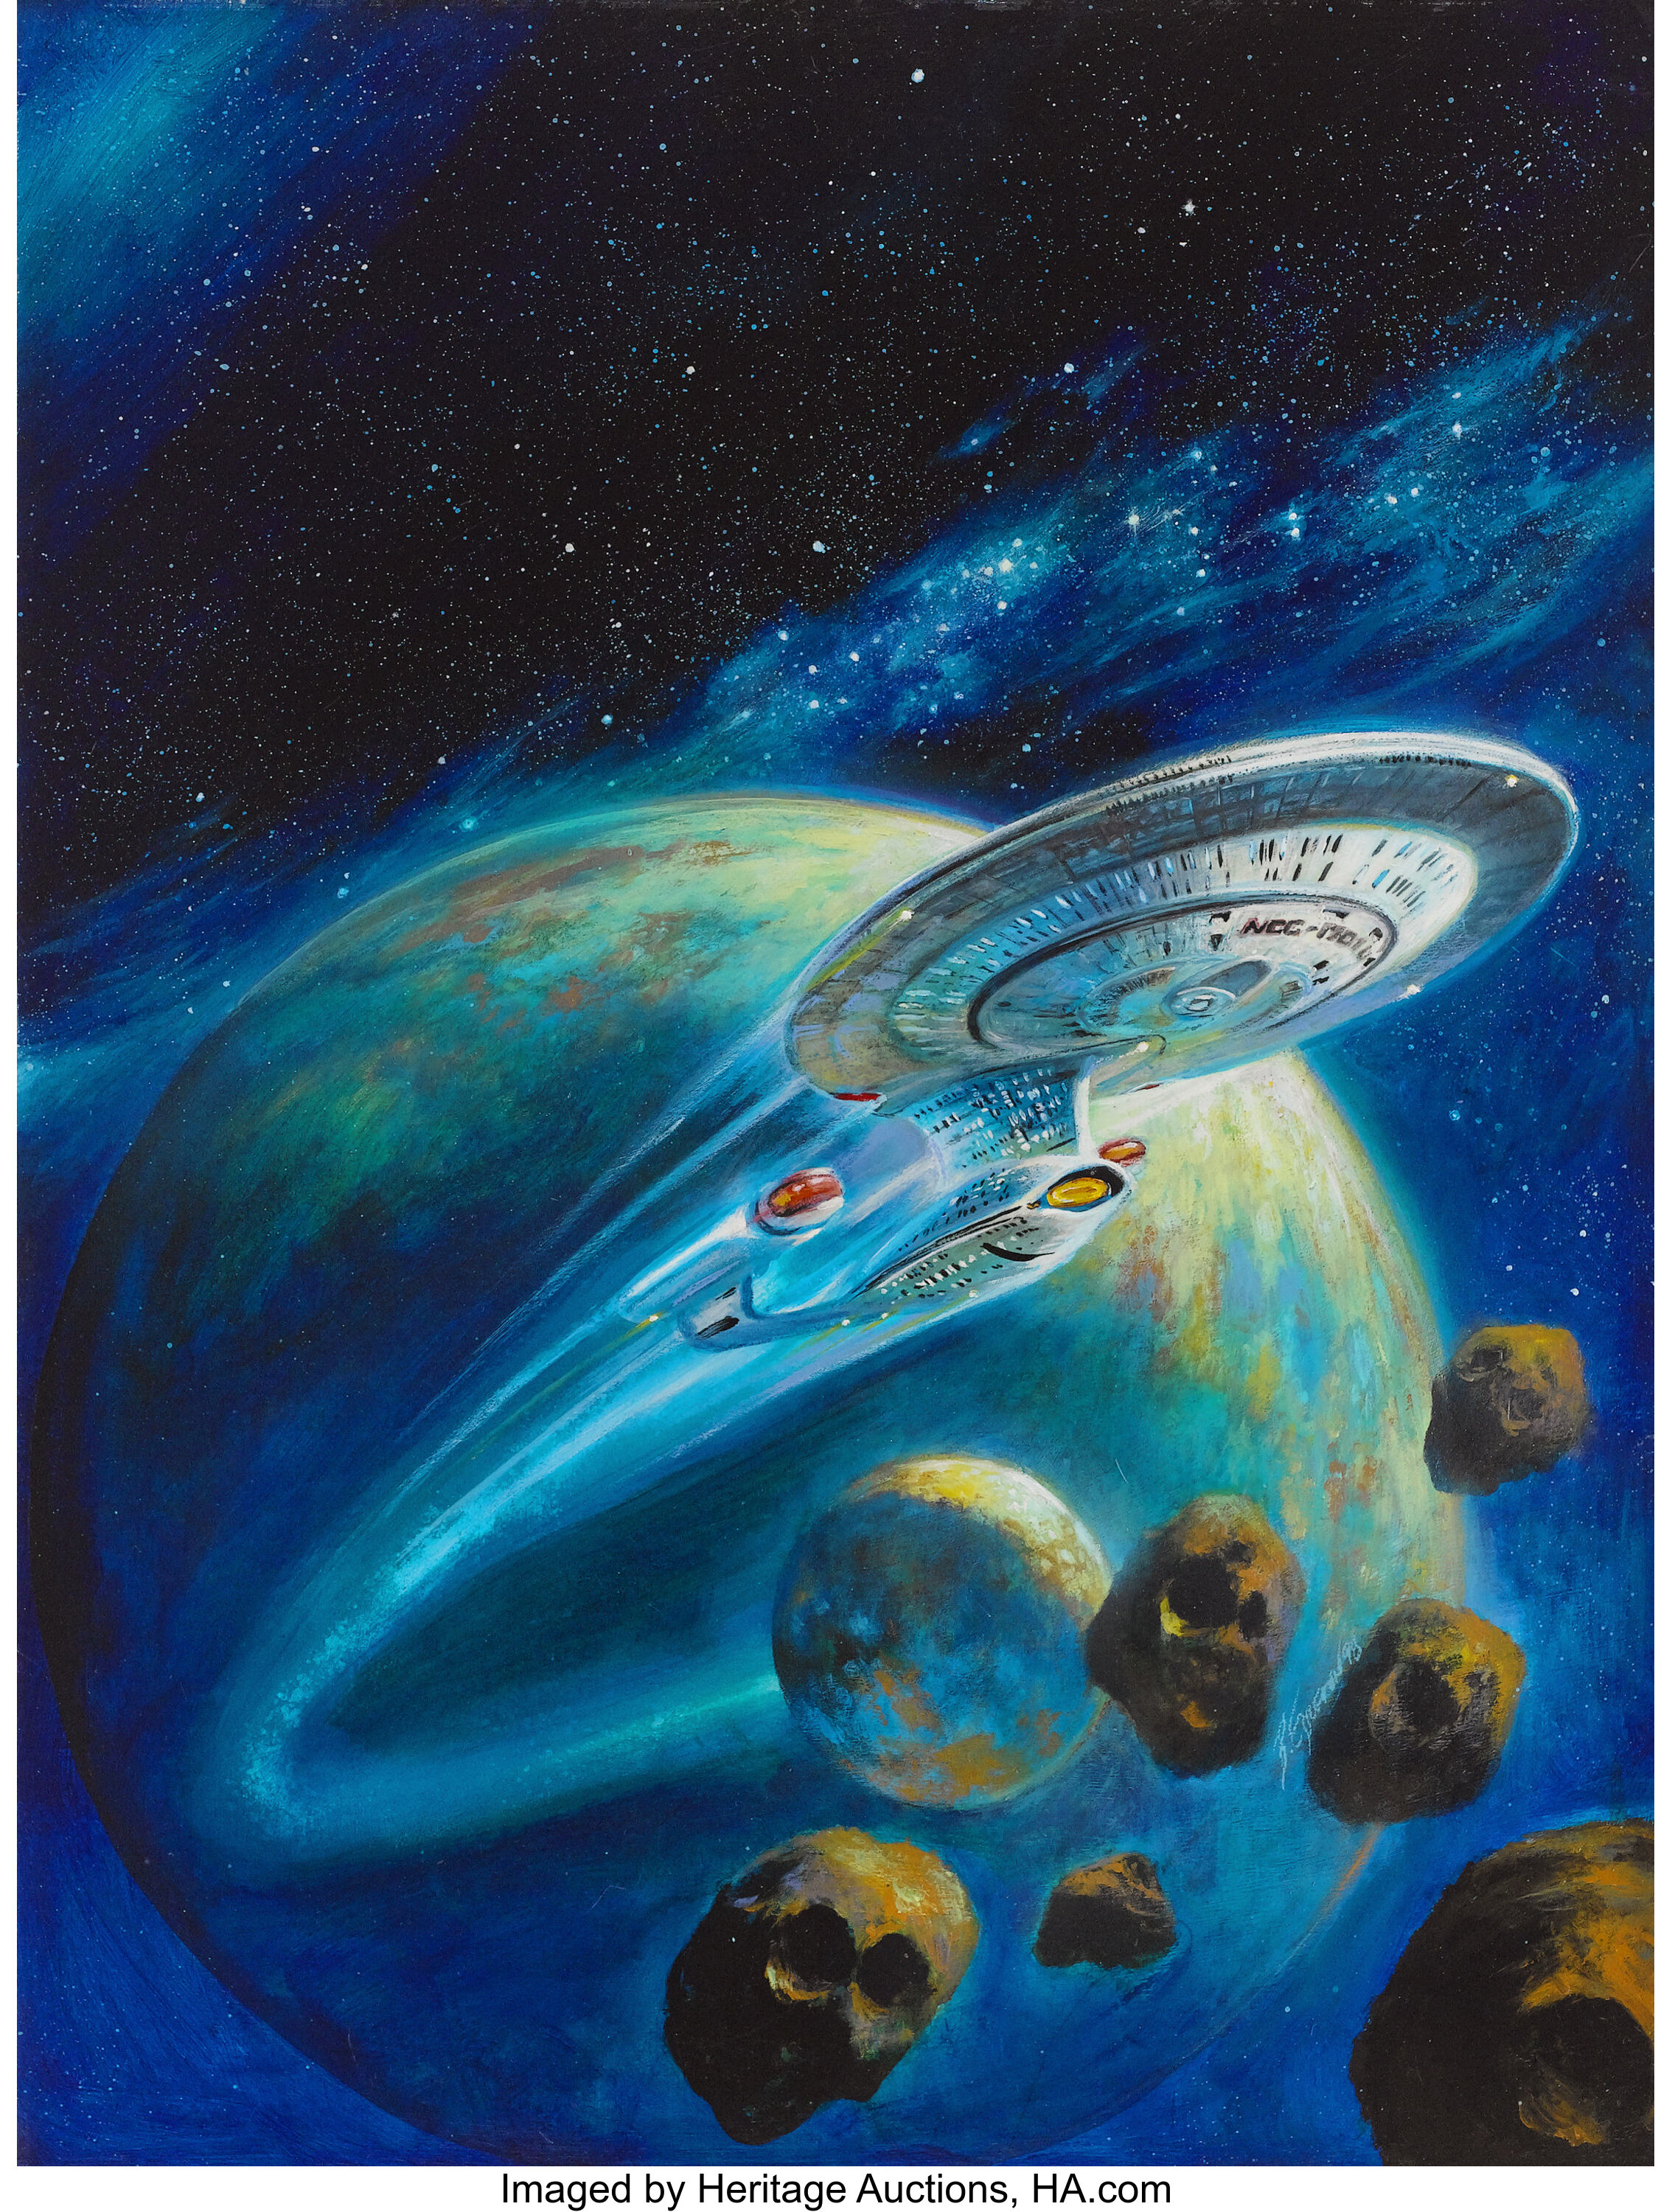 Bob Eggleton Signed Star Trek Master Series Card ~ The Final